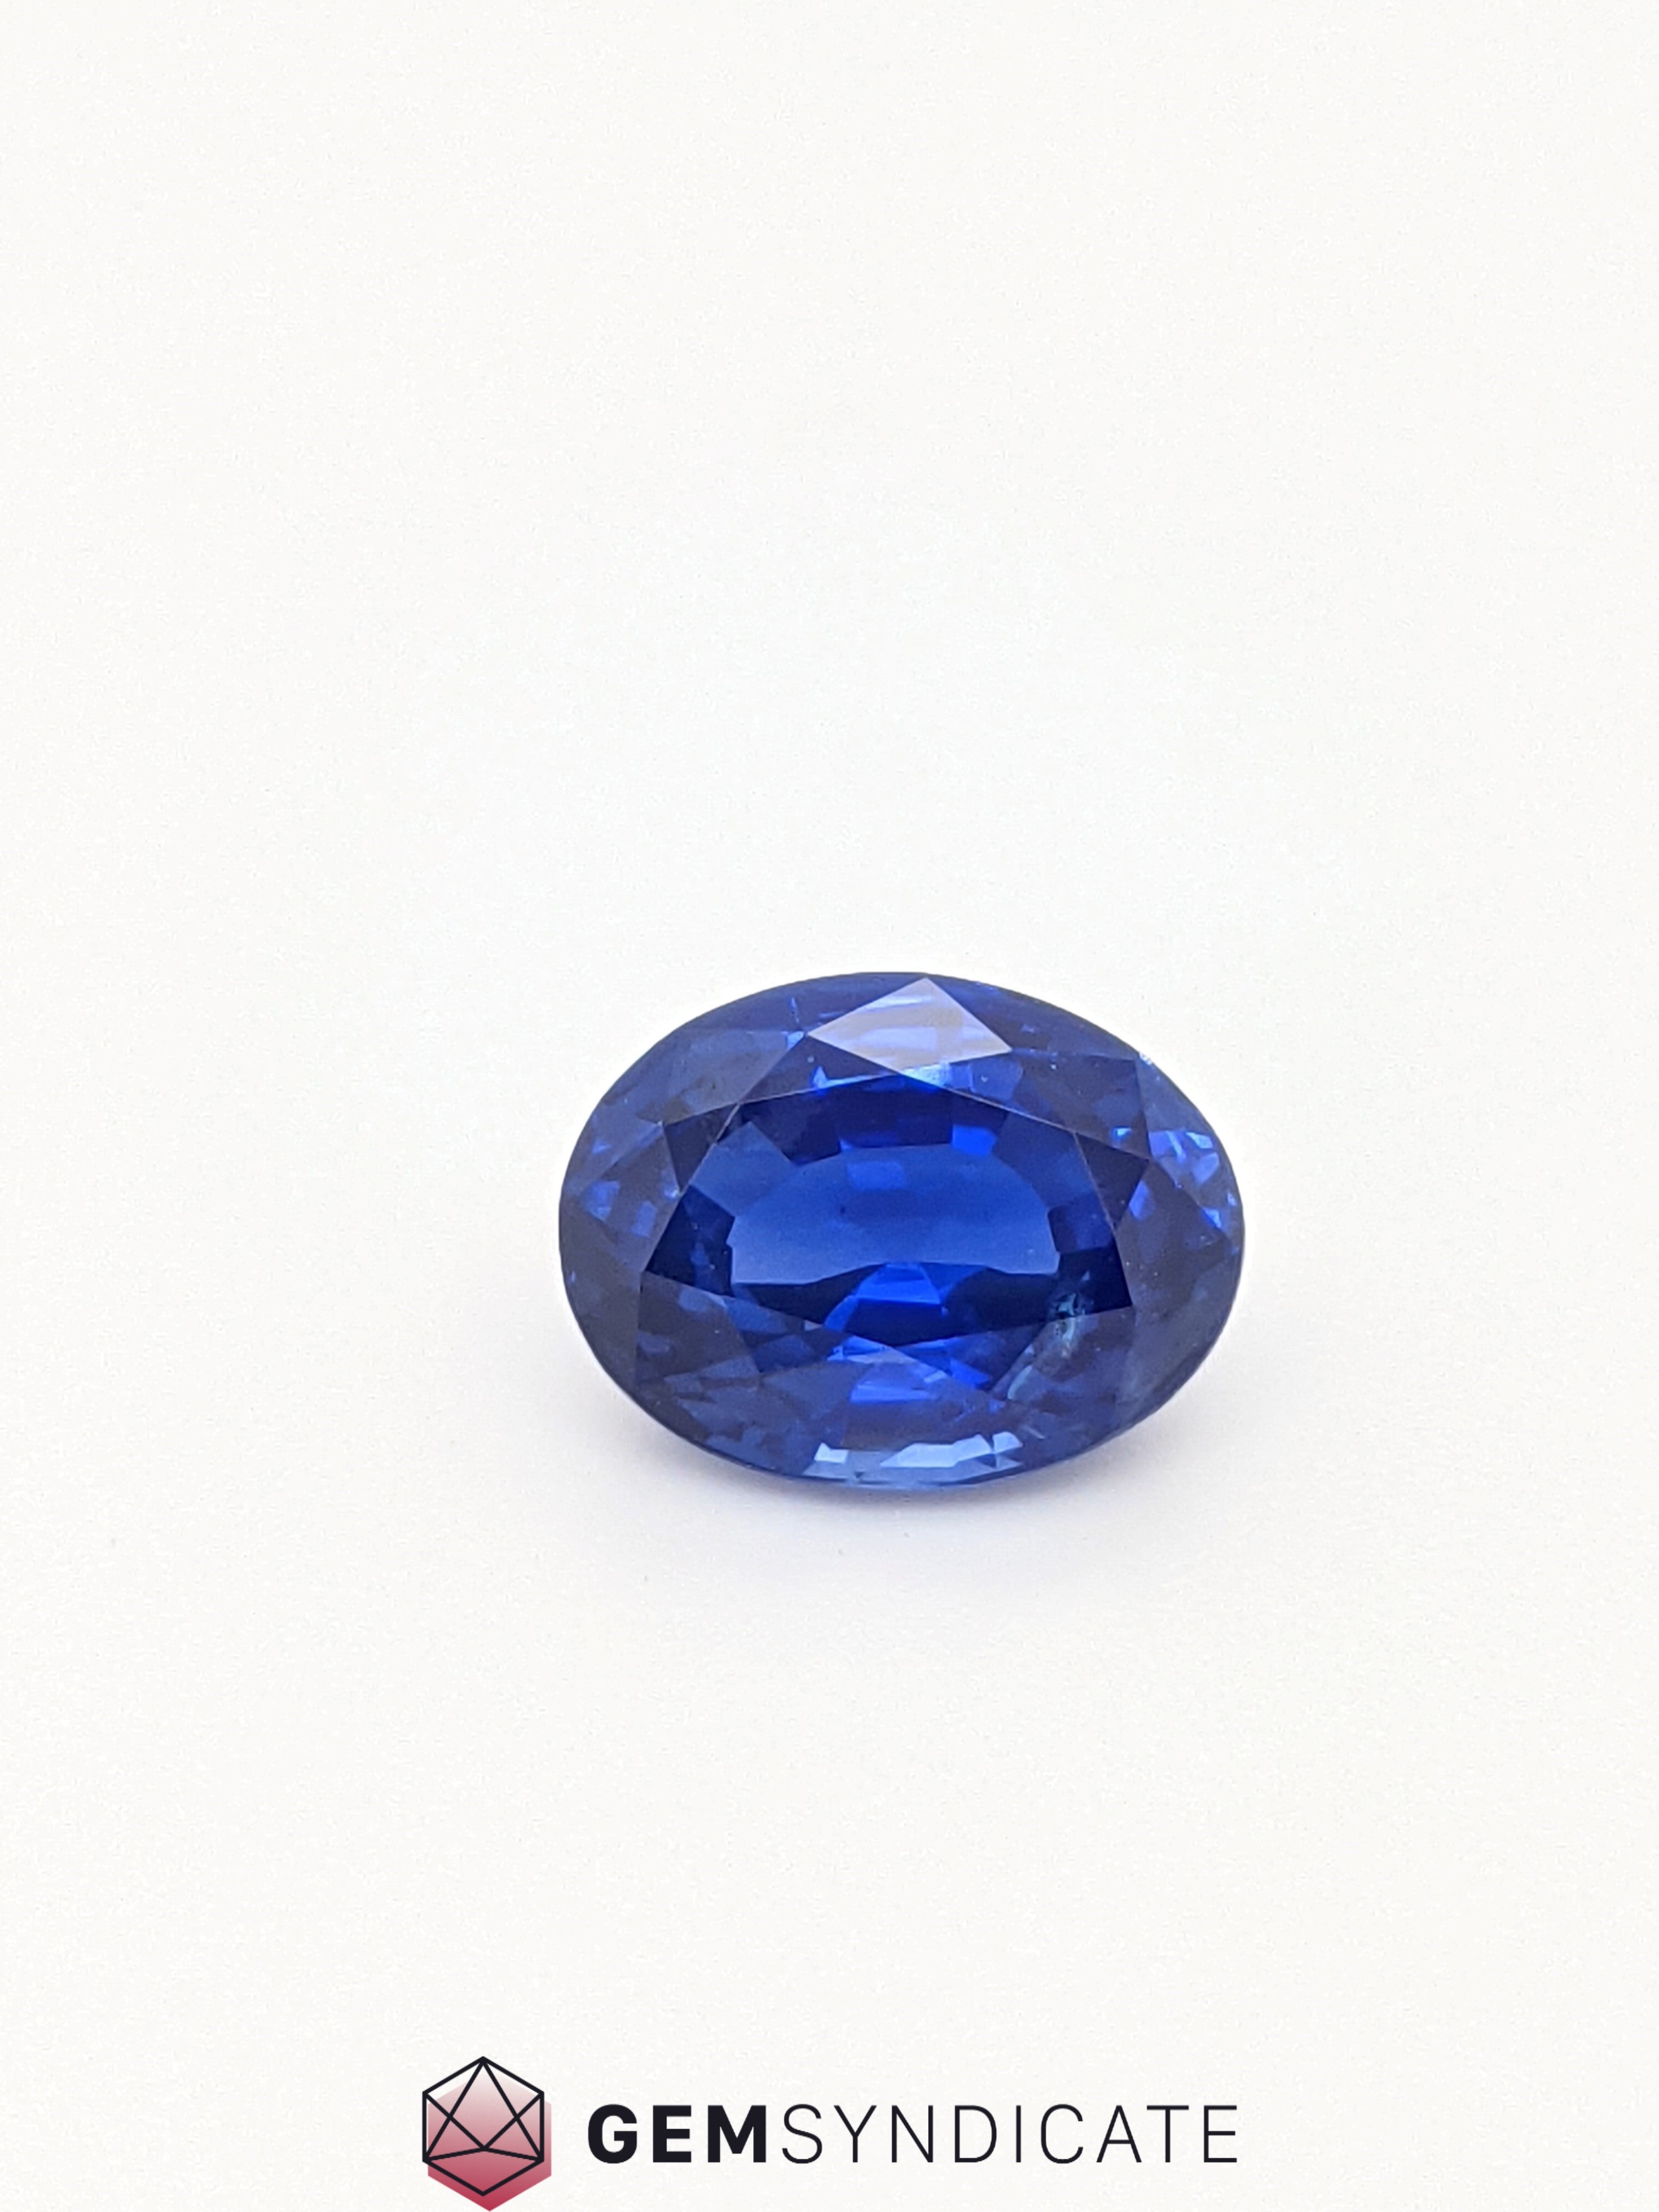 Astonishing Oval Blue Sapphire 2.25ct